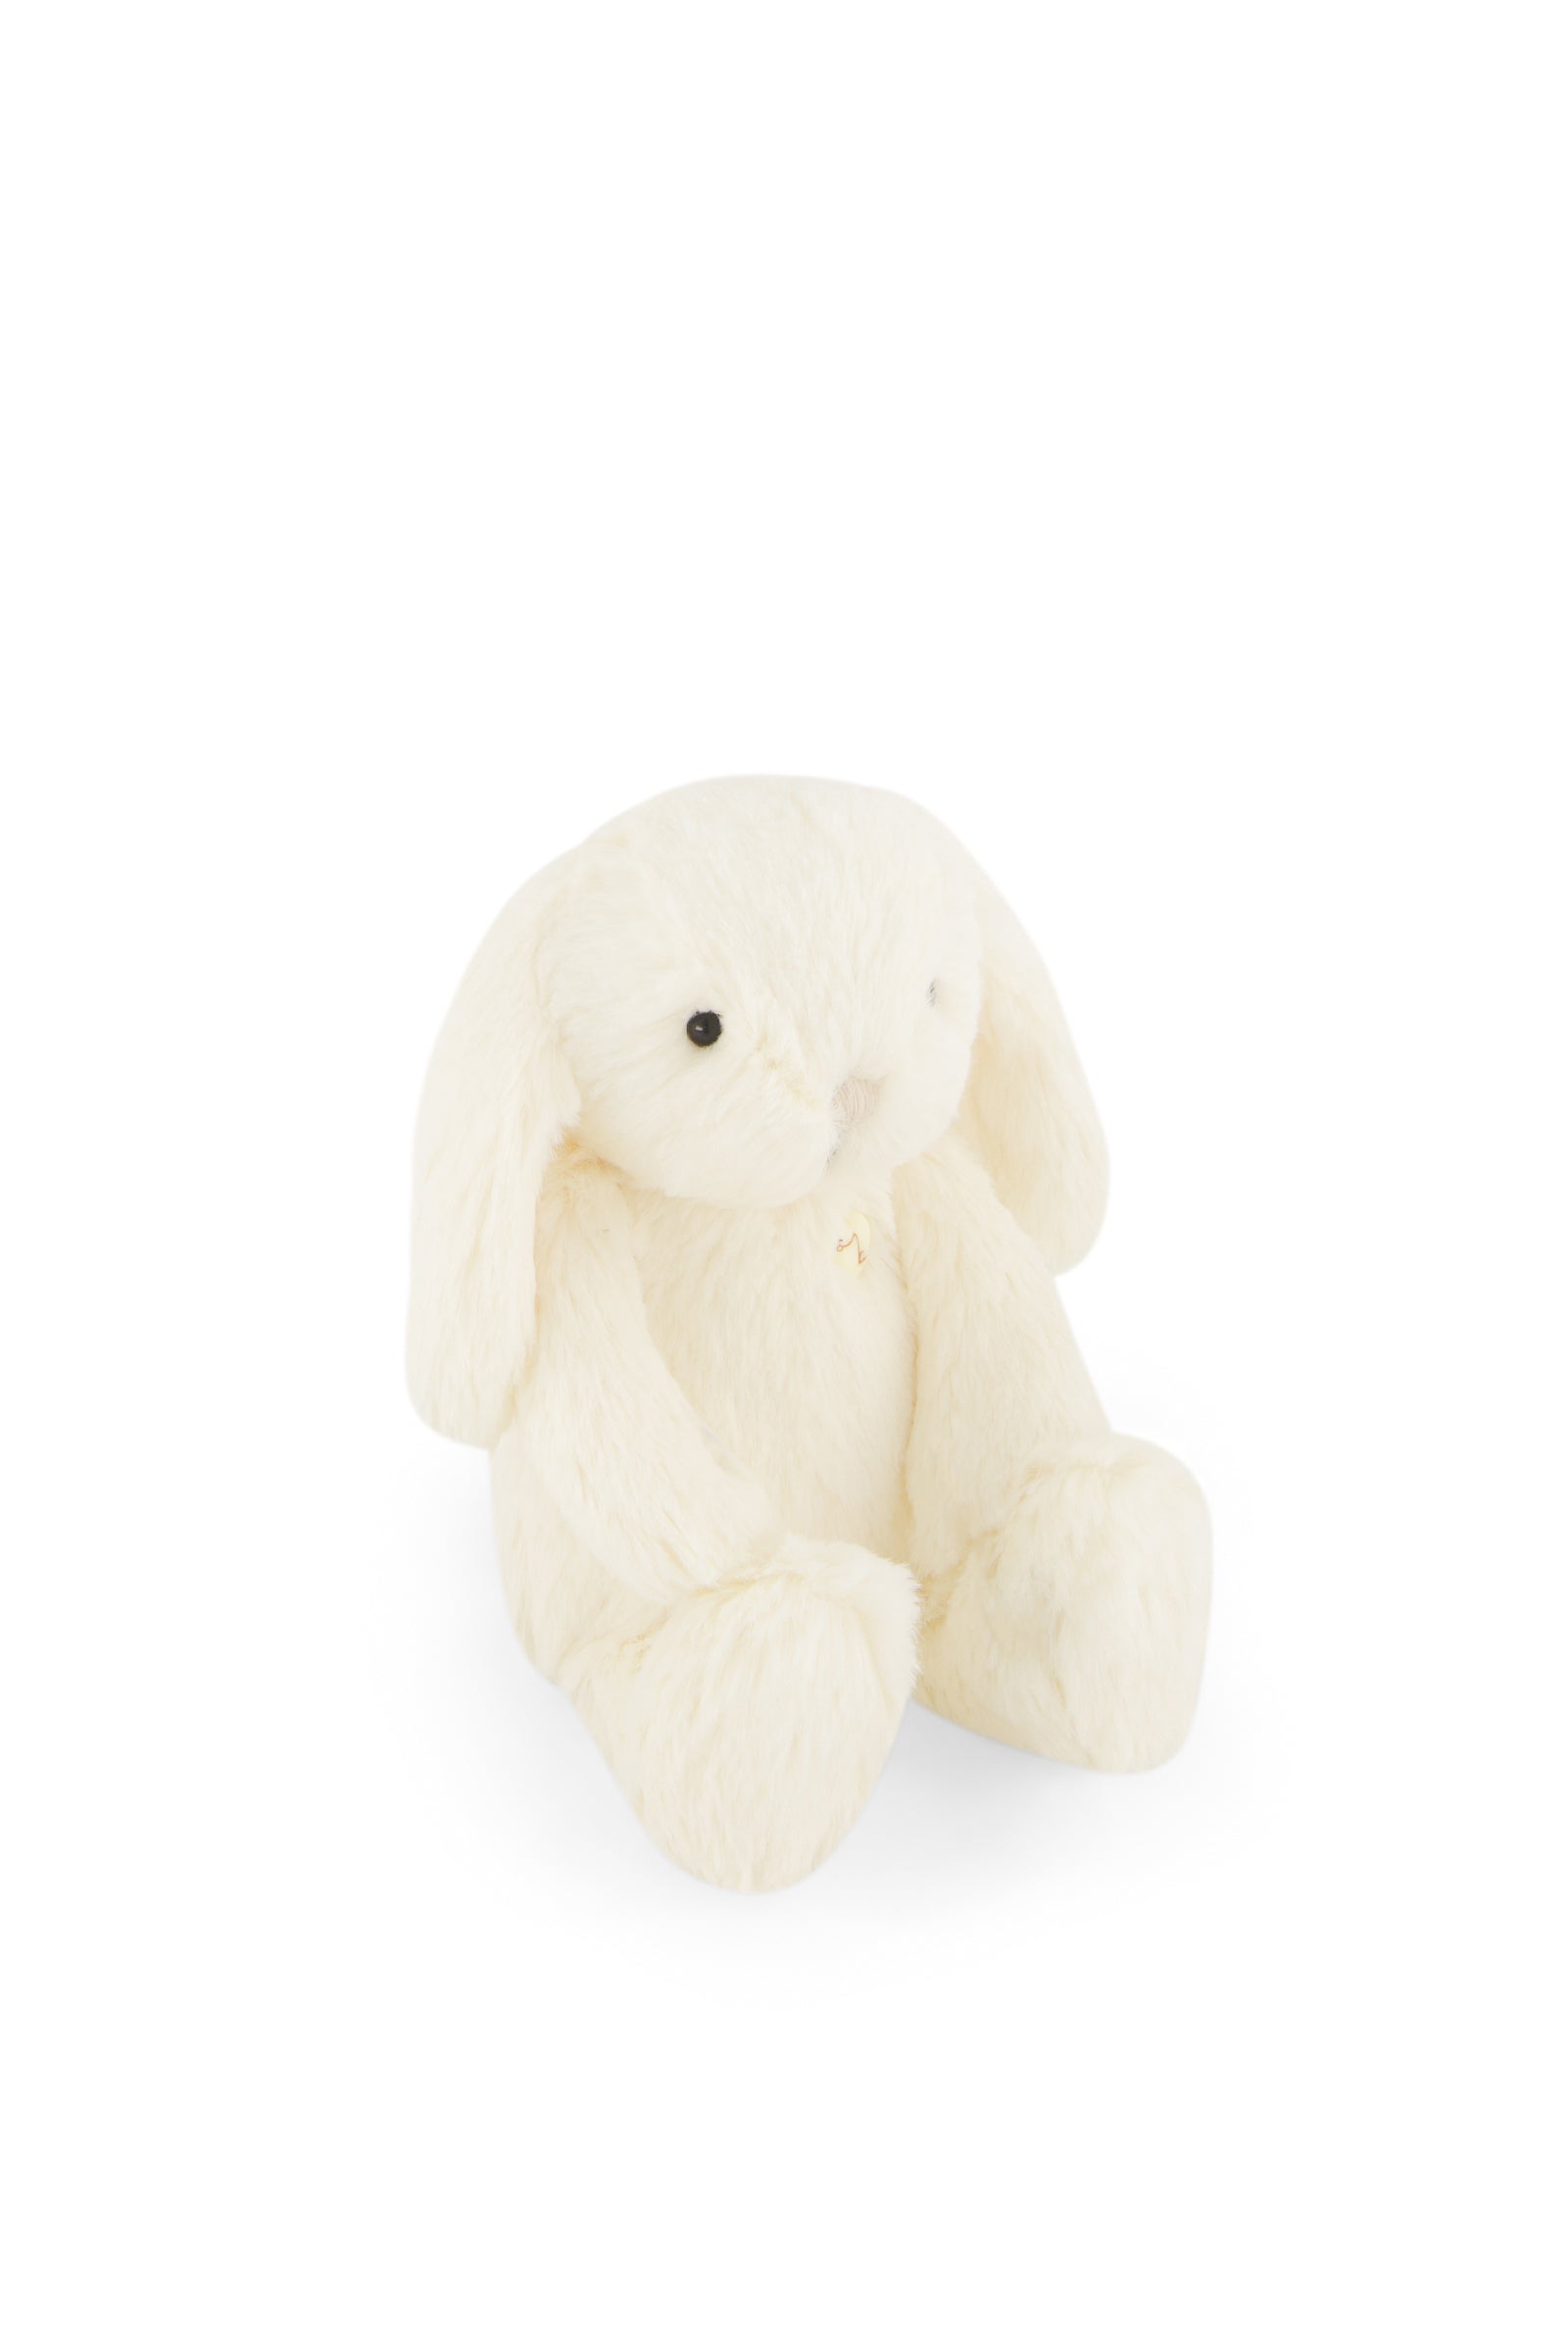 Snuggle Bunnies | Penelope the Bunny | Marshmallow